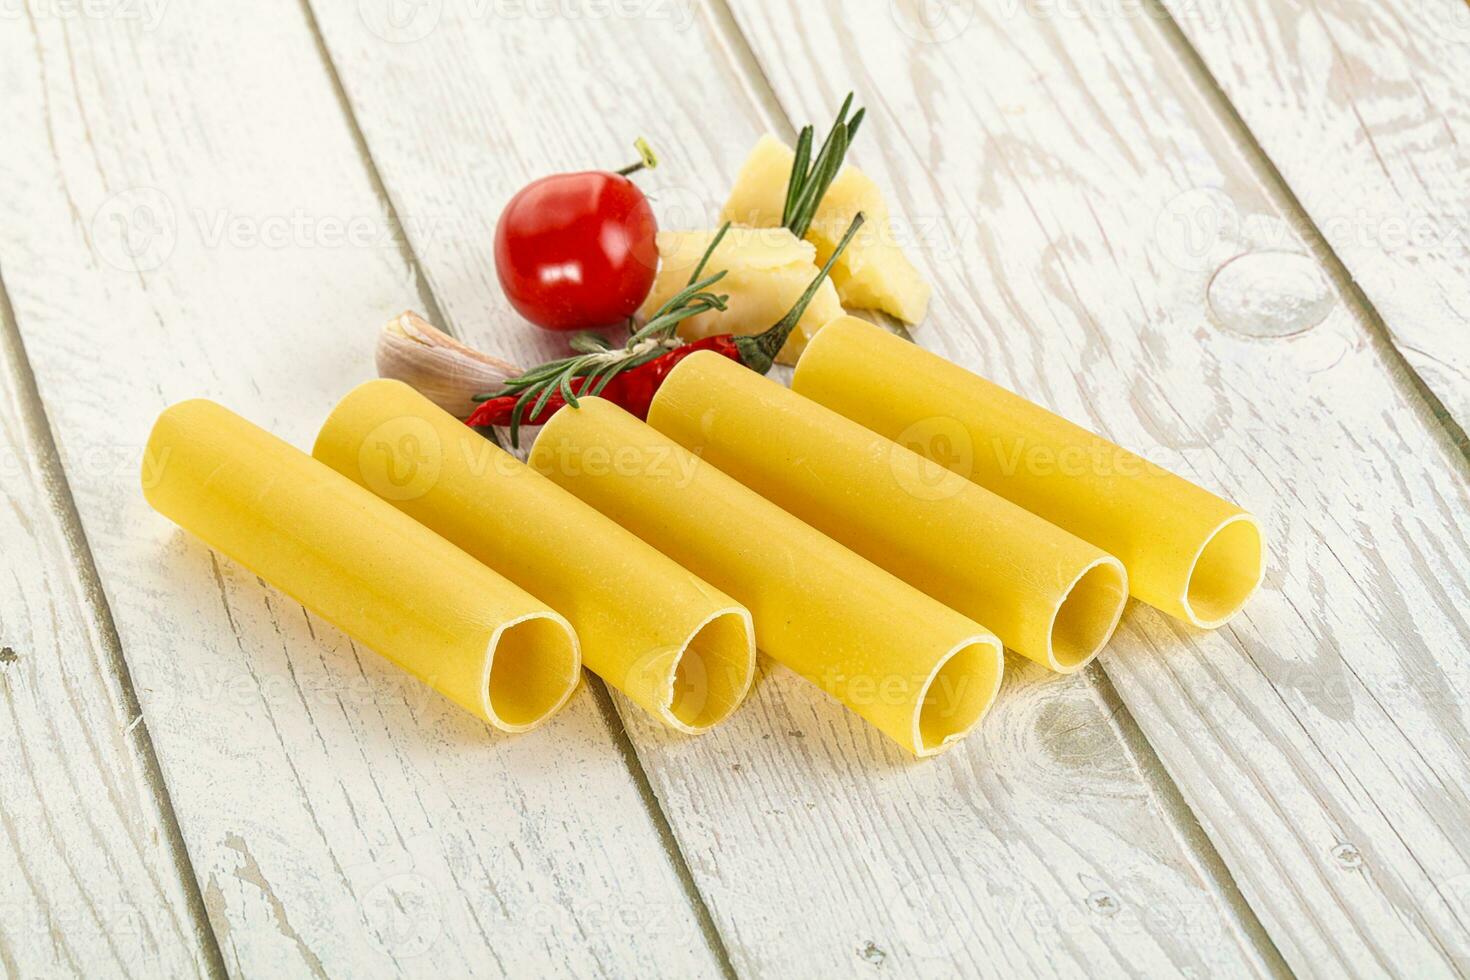 rauw ongekookt Italiaans pasta cannelloni foto